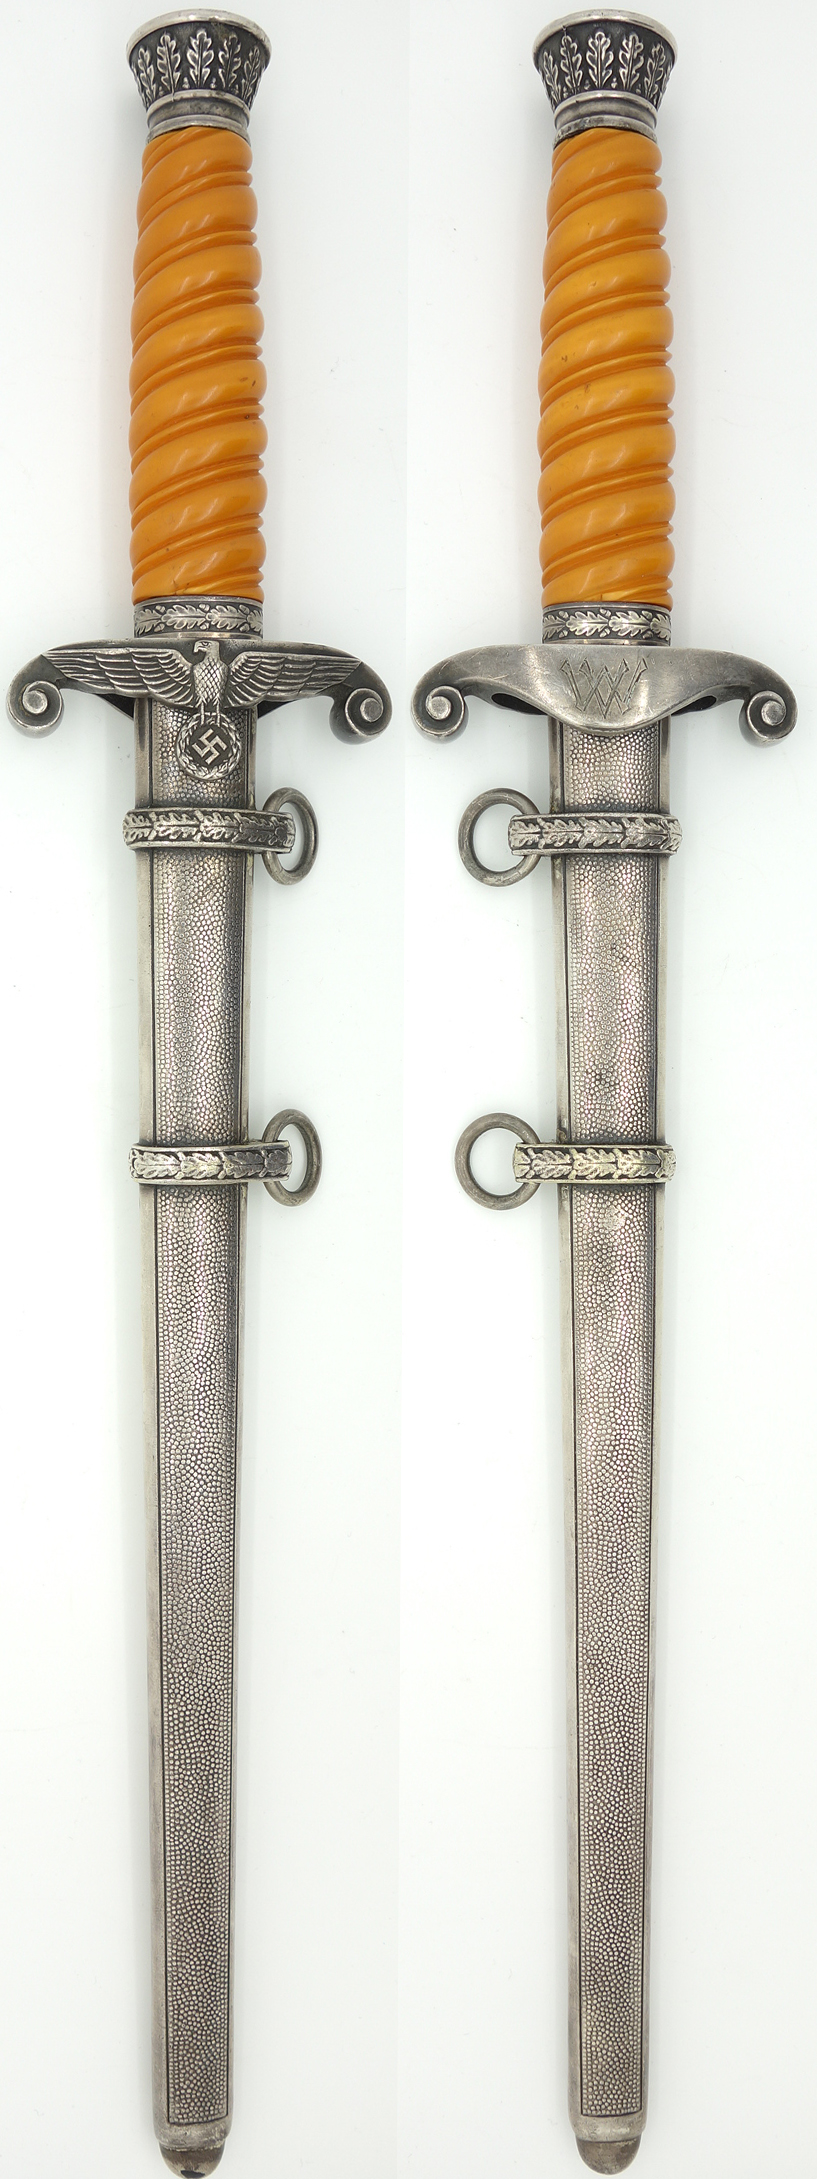 Personalized Army Dagger by Eickhorn